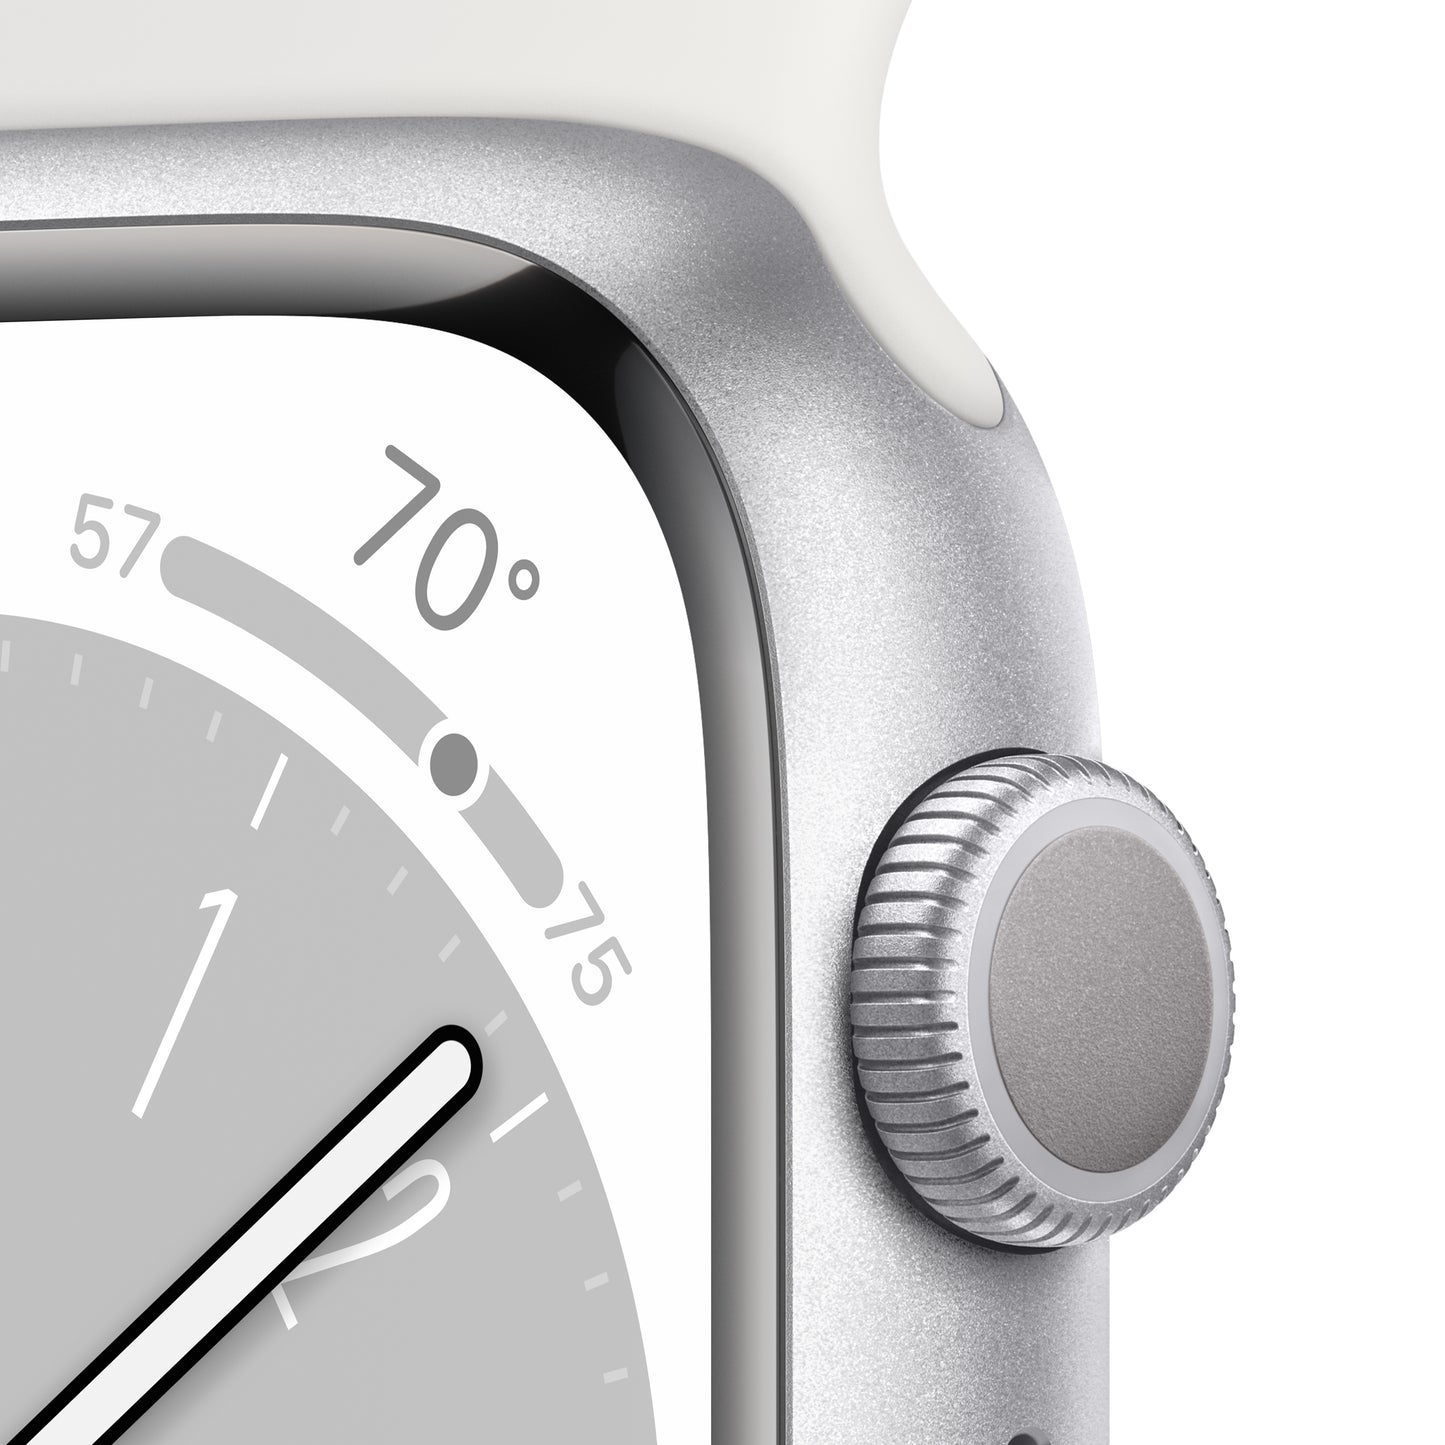 Apple Watch Series 8 (GPS) - Caja de aluminio en plata de 45 mm - Correa deportiva blanca - Talla única